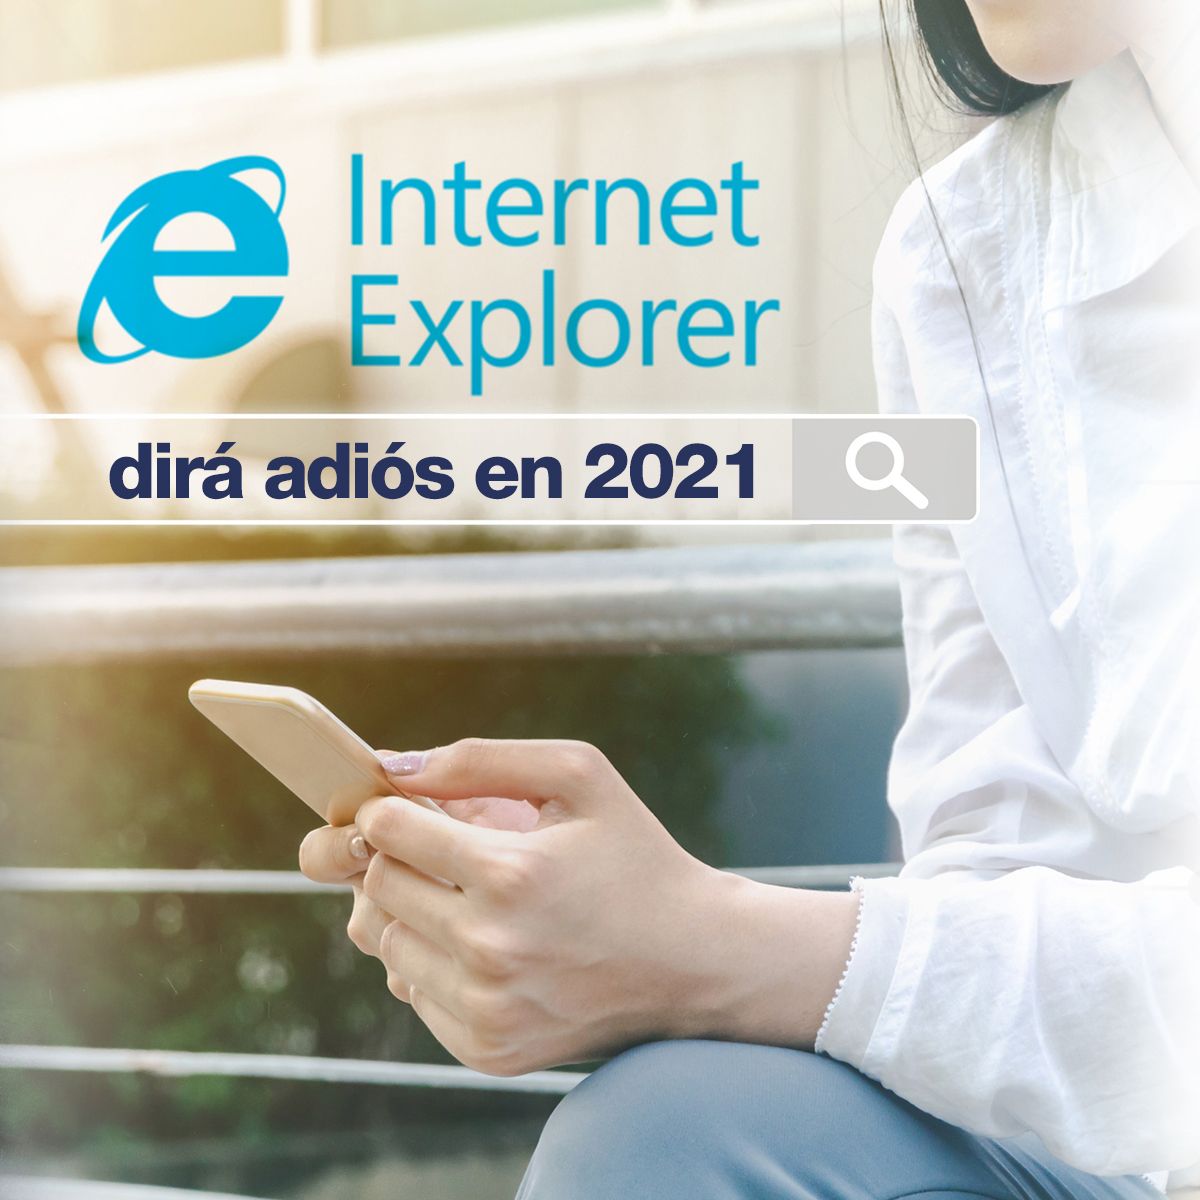 Internet Explorer dirá adiós en 2021